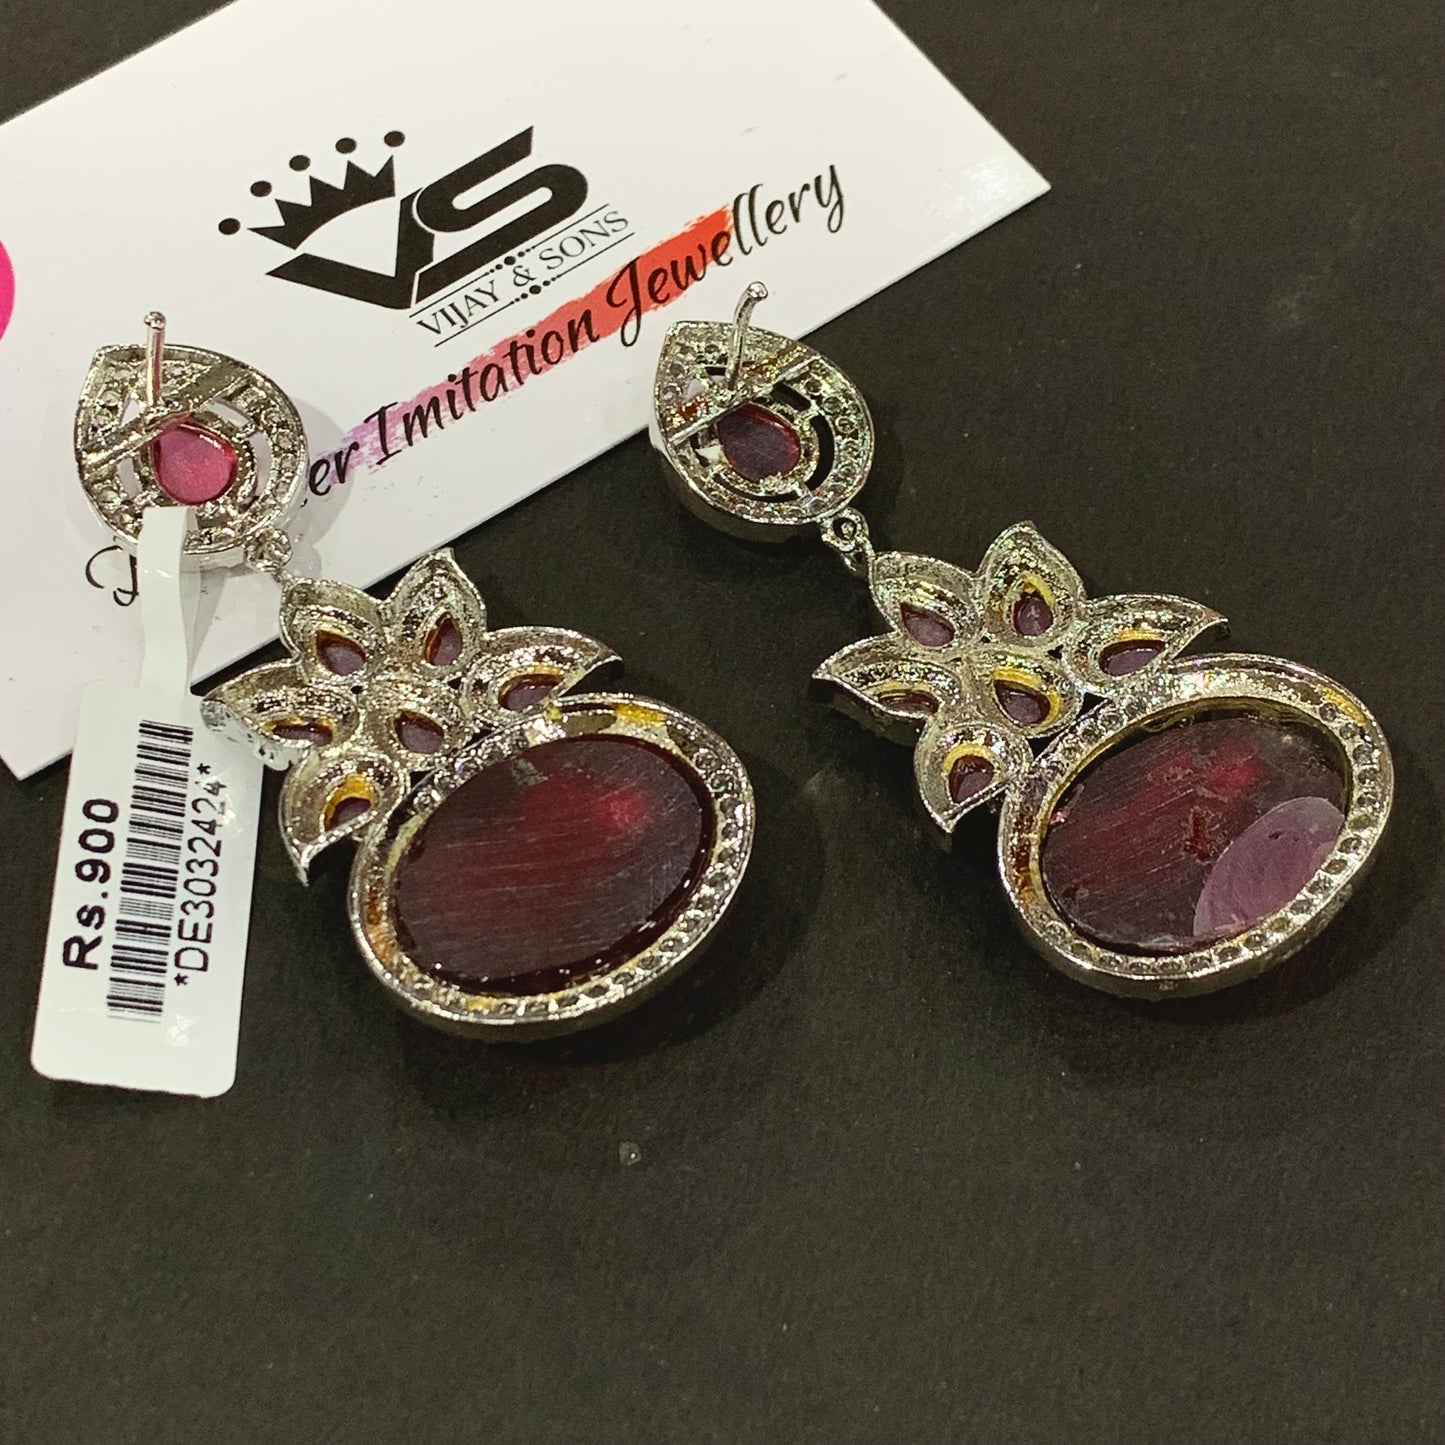 American diamond earrings 445757